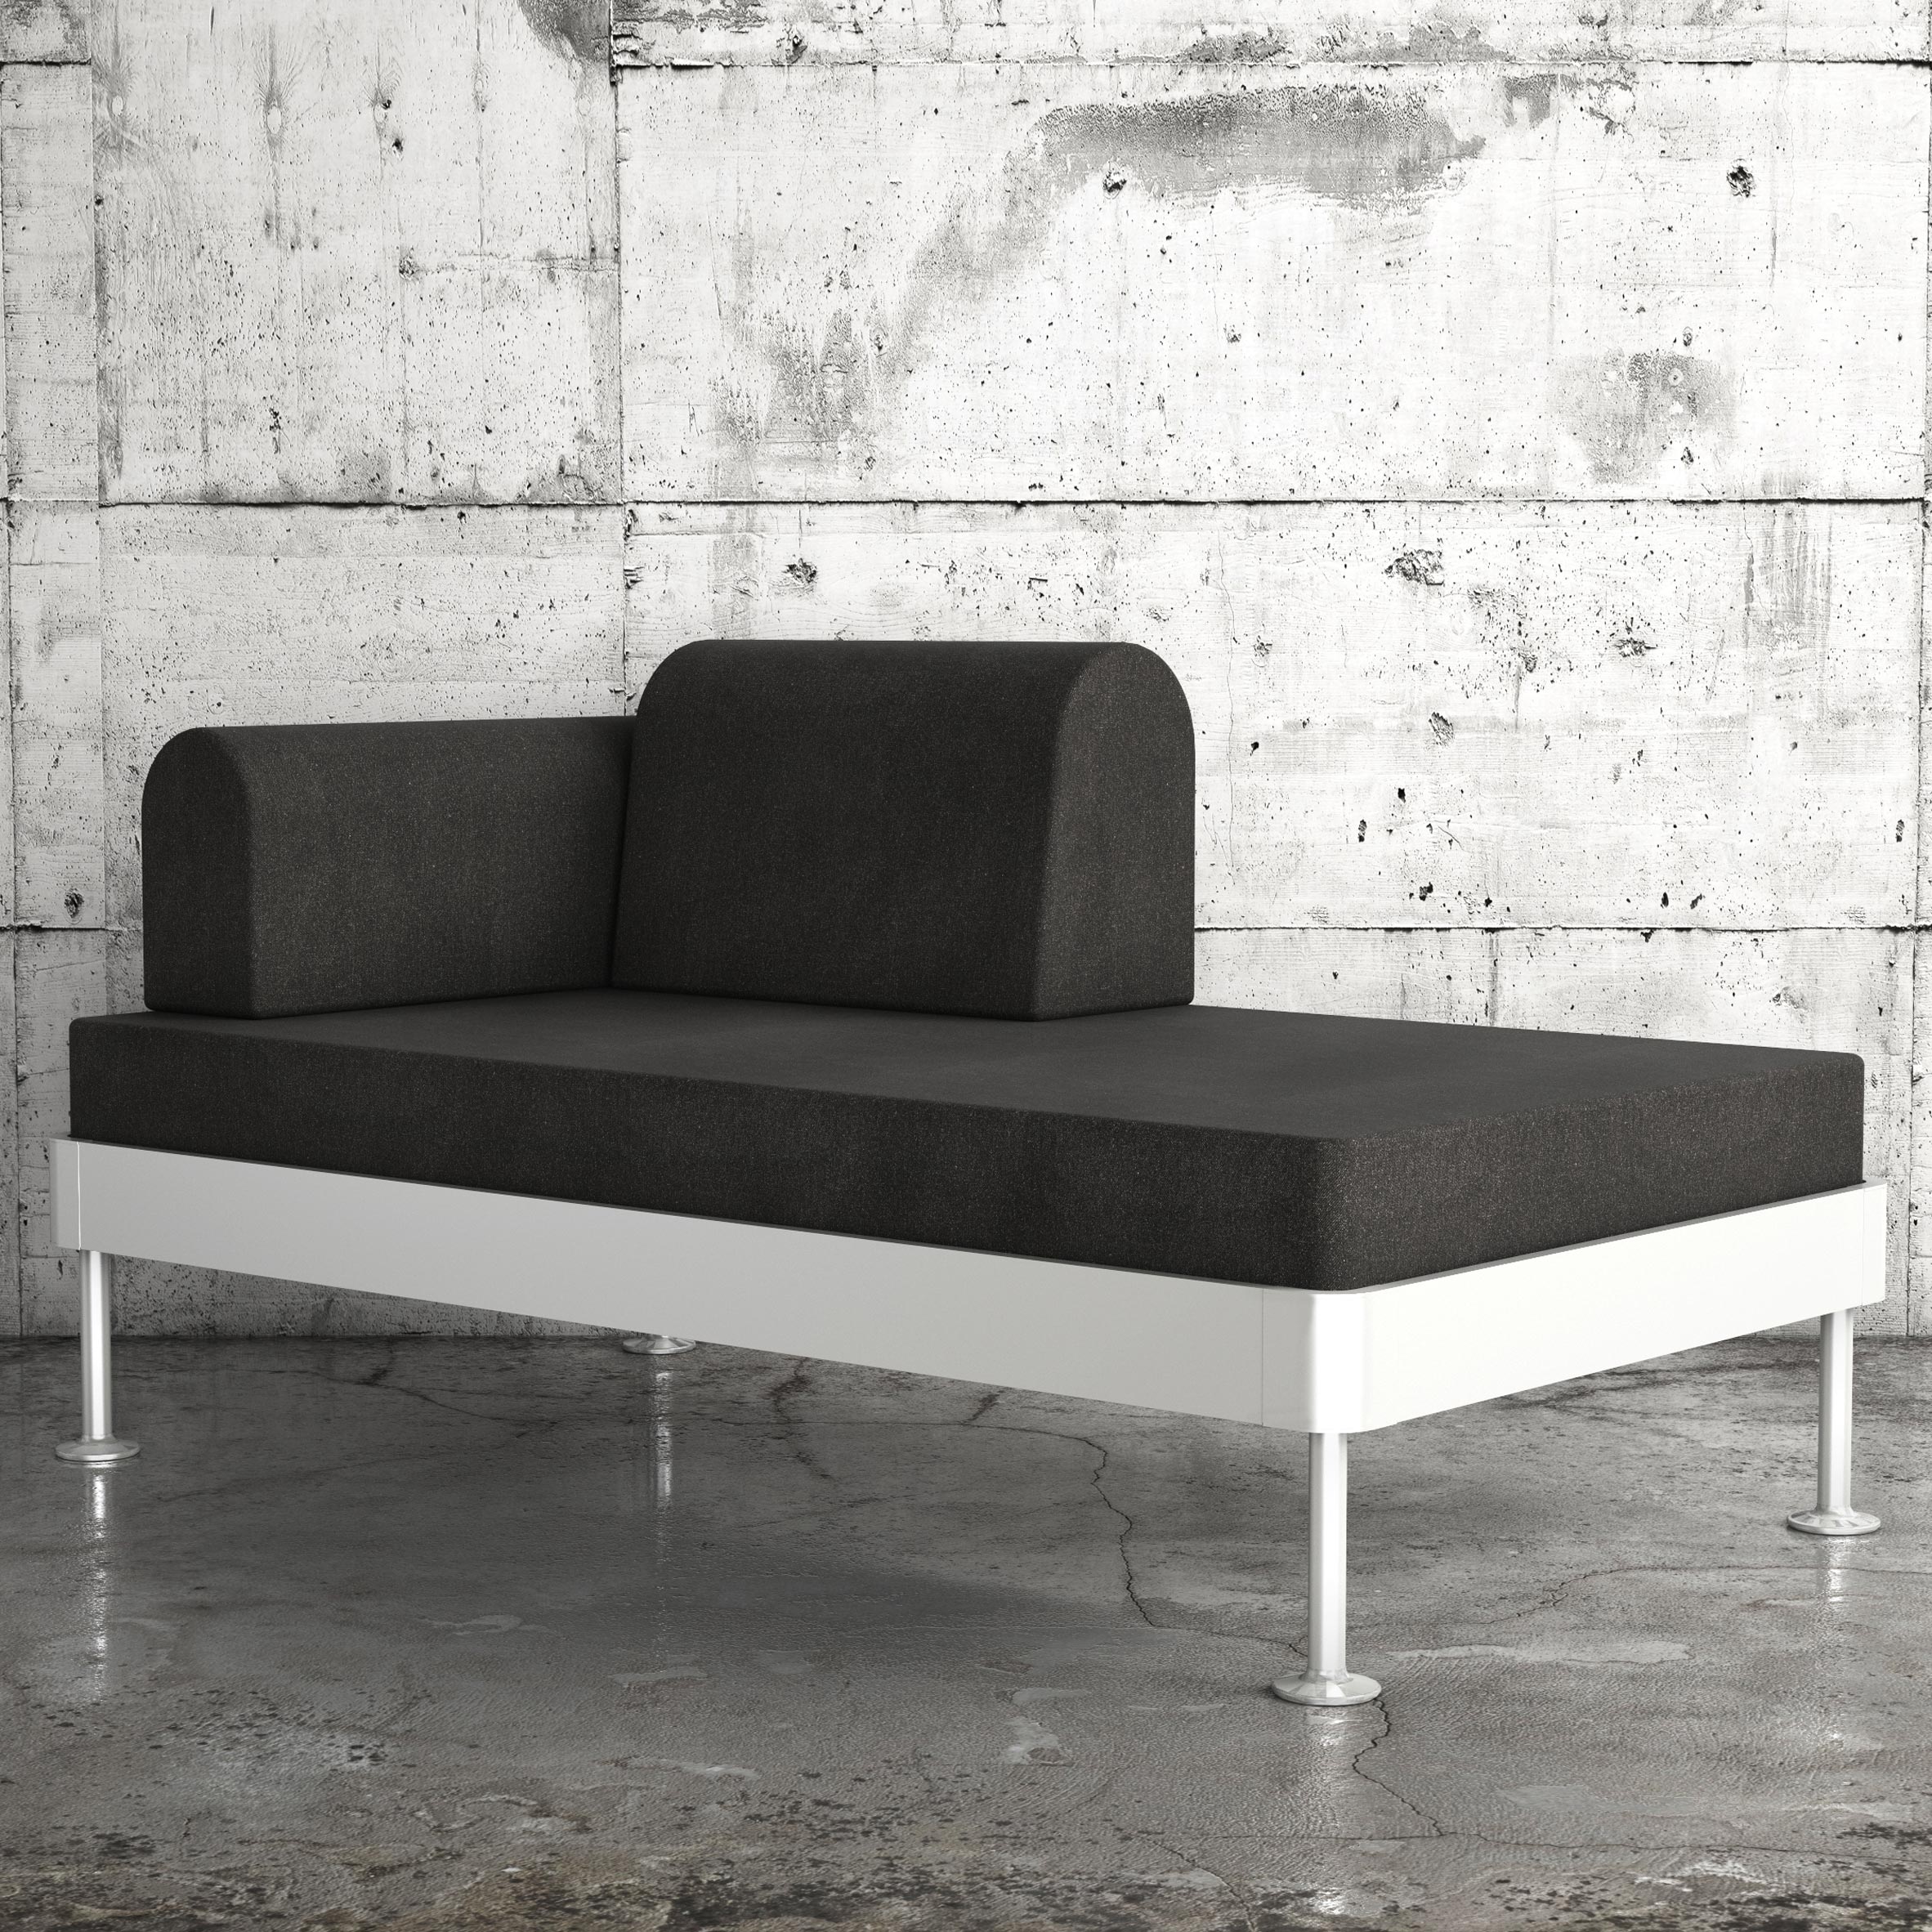 IKEA Dixon's Delaktig modular bed and sofa